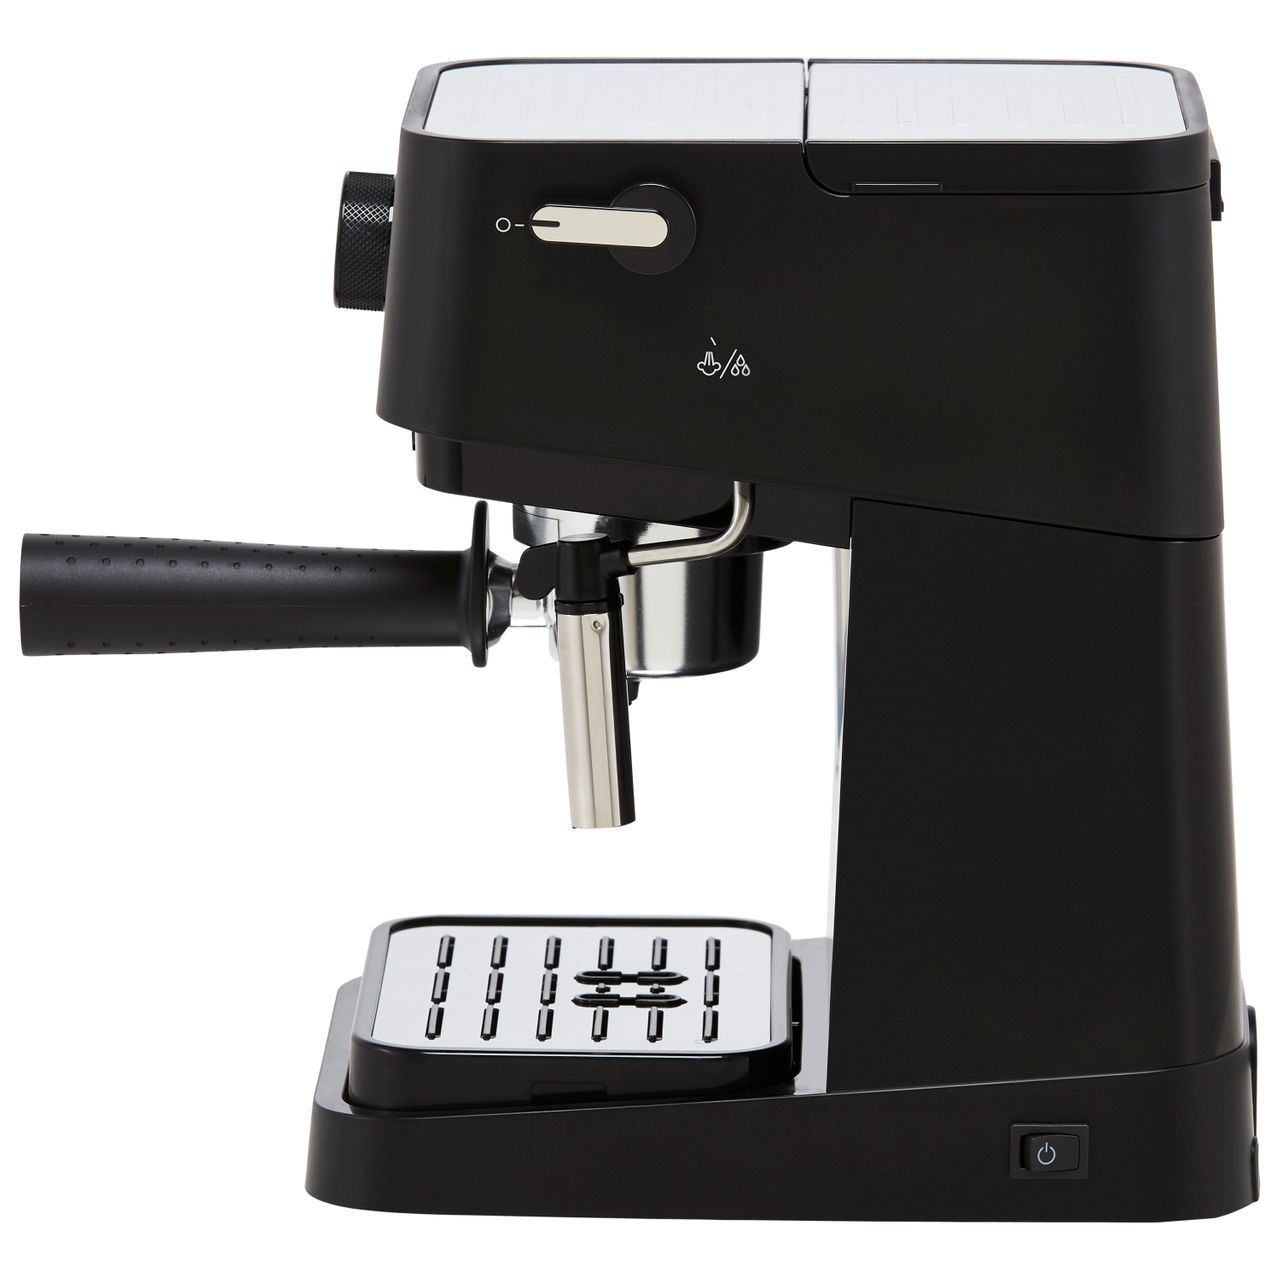 De'Longhi Stilosa Espresso EC260 Coffee Machine, Green